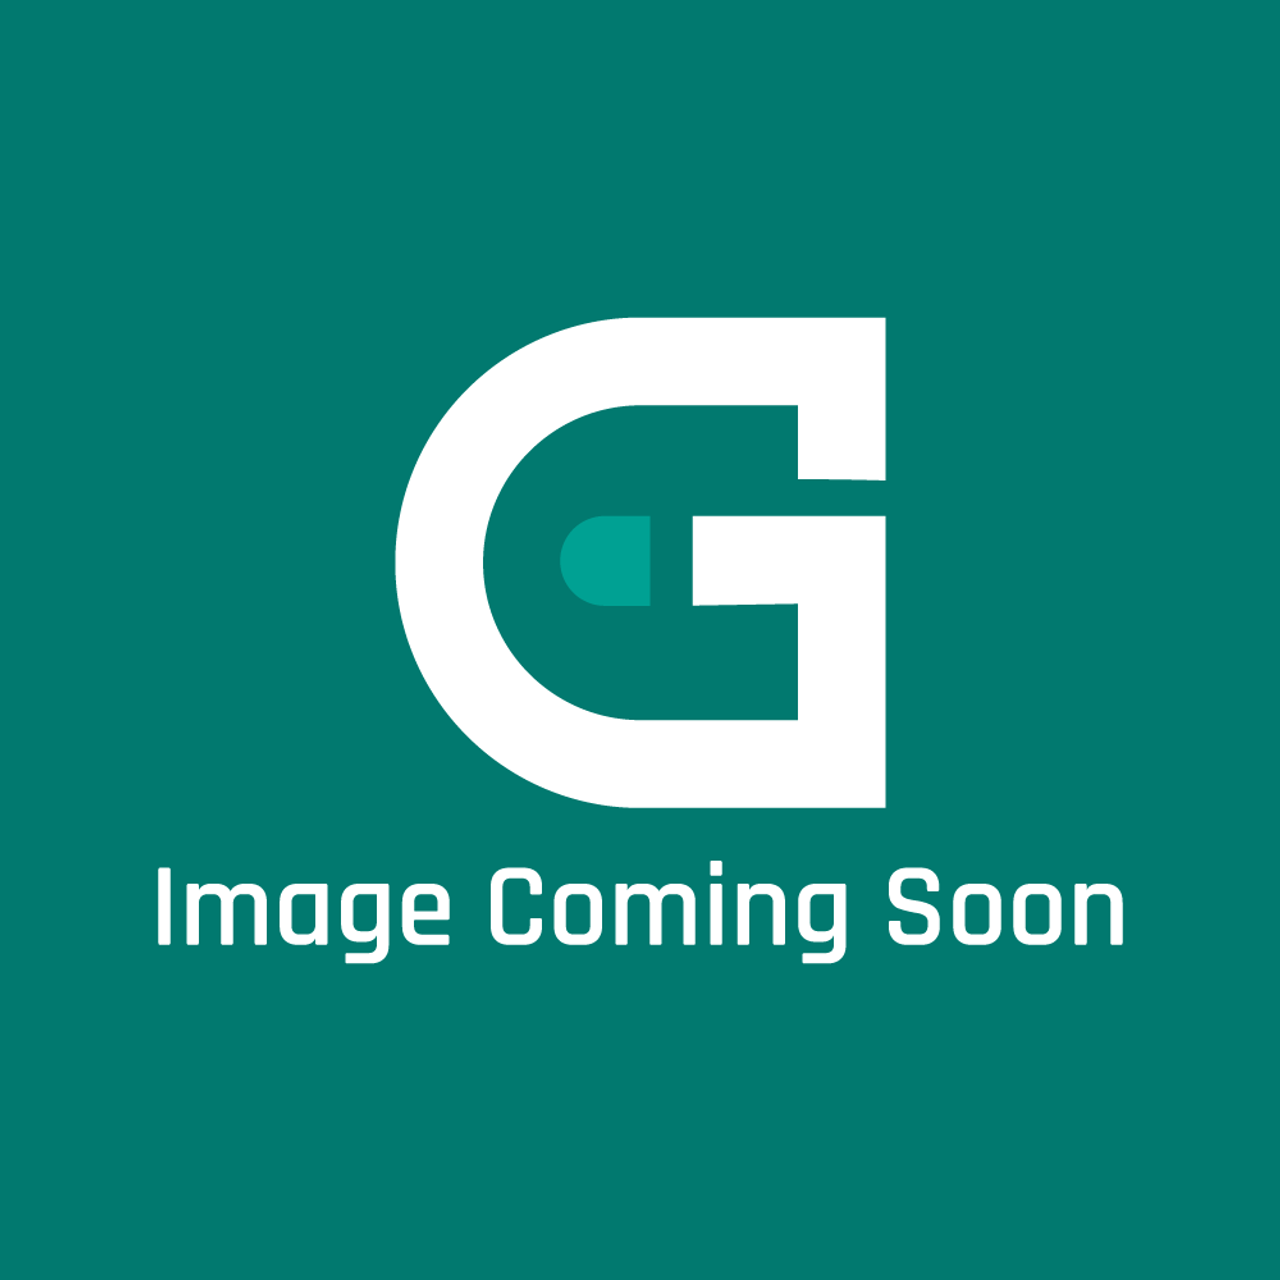 GE Appliances WZ4X245D - Screw-Pkg 12 - Image Coming Soon!